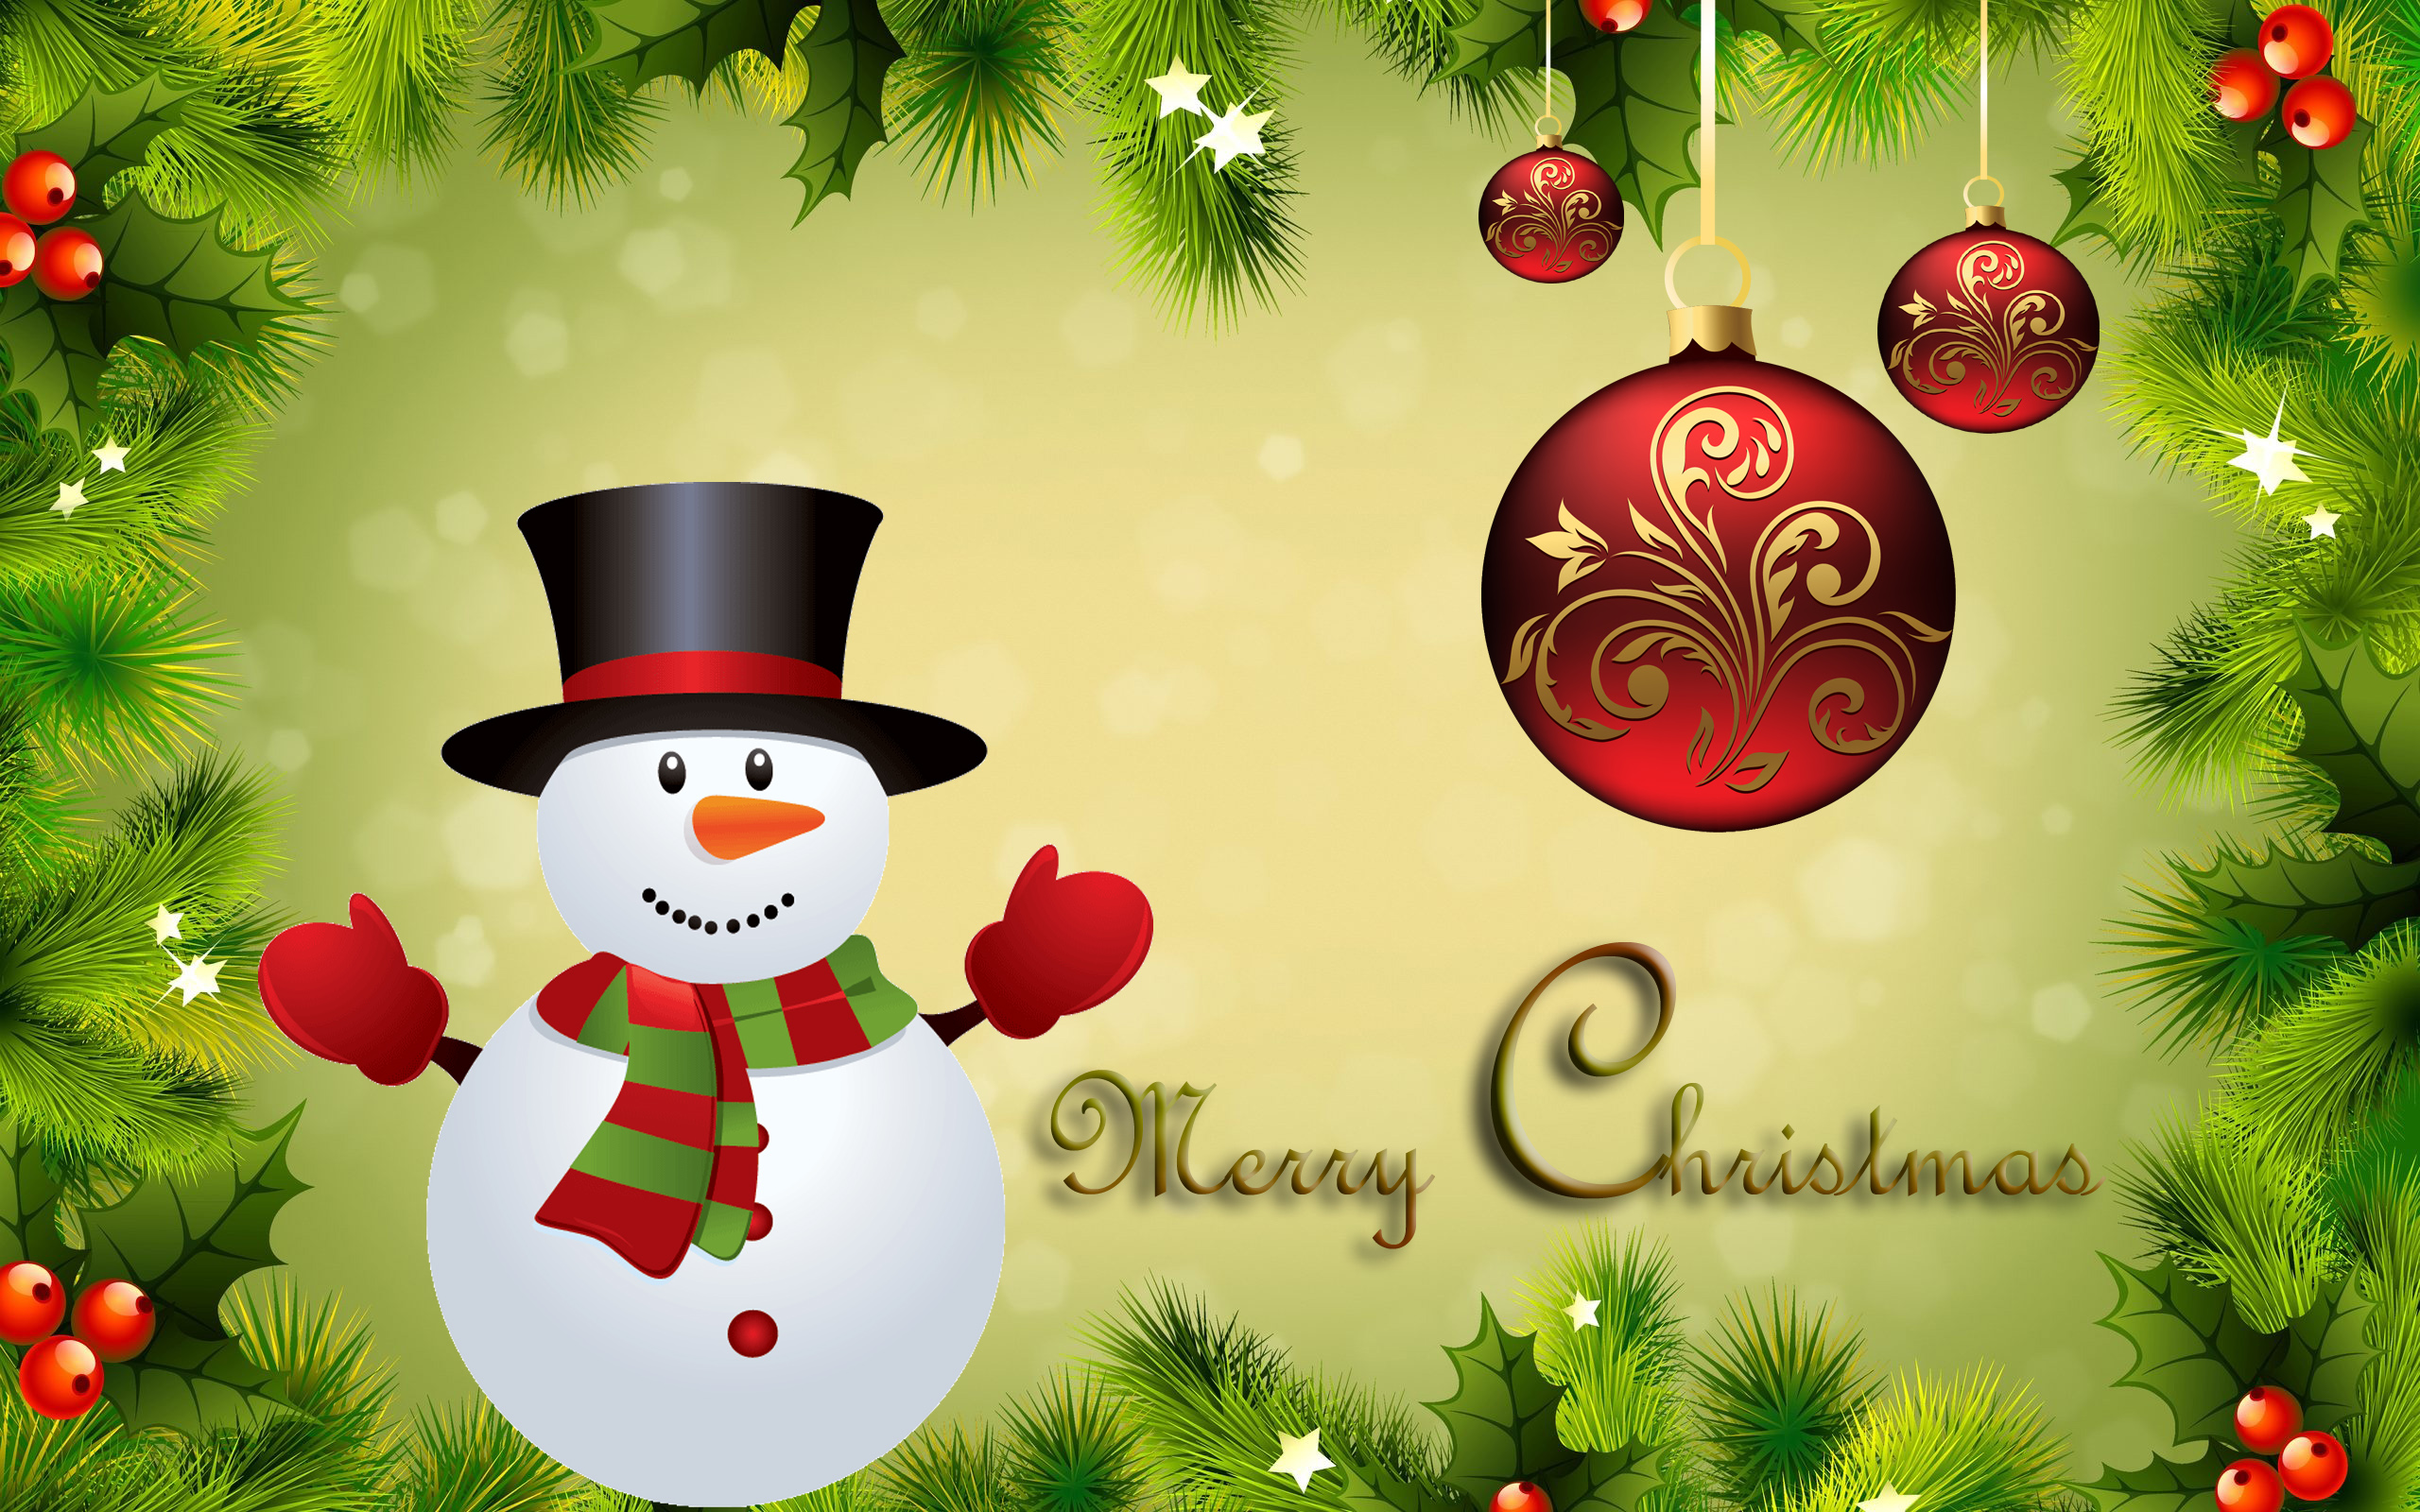 Download 67+ Merry Christmas Desktop Backgrounds on WallpaperSafari